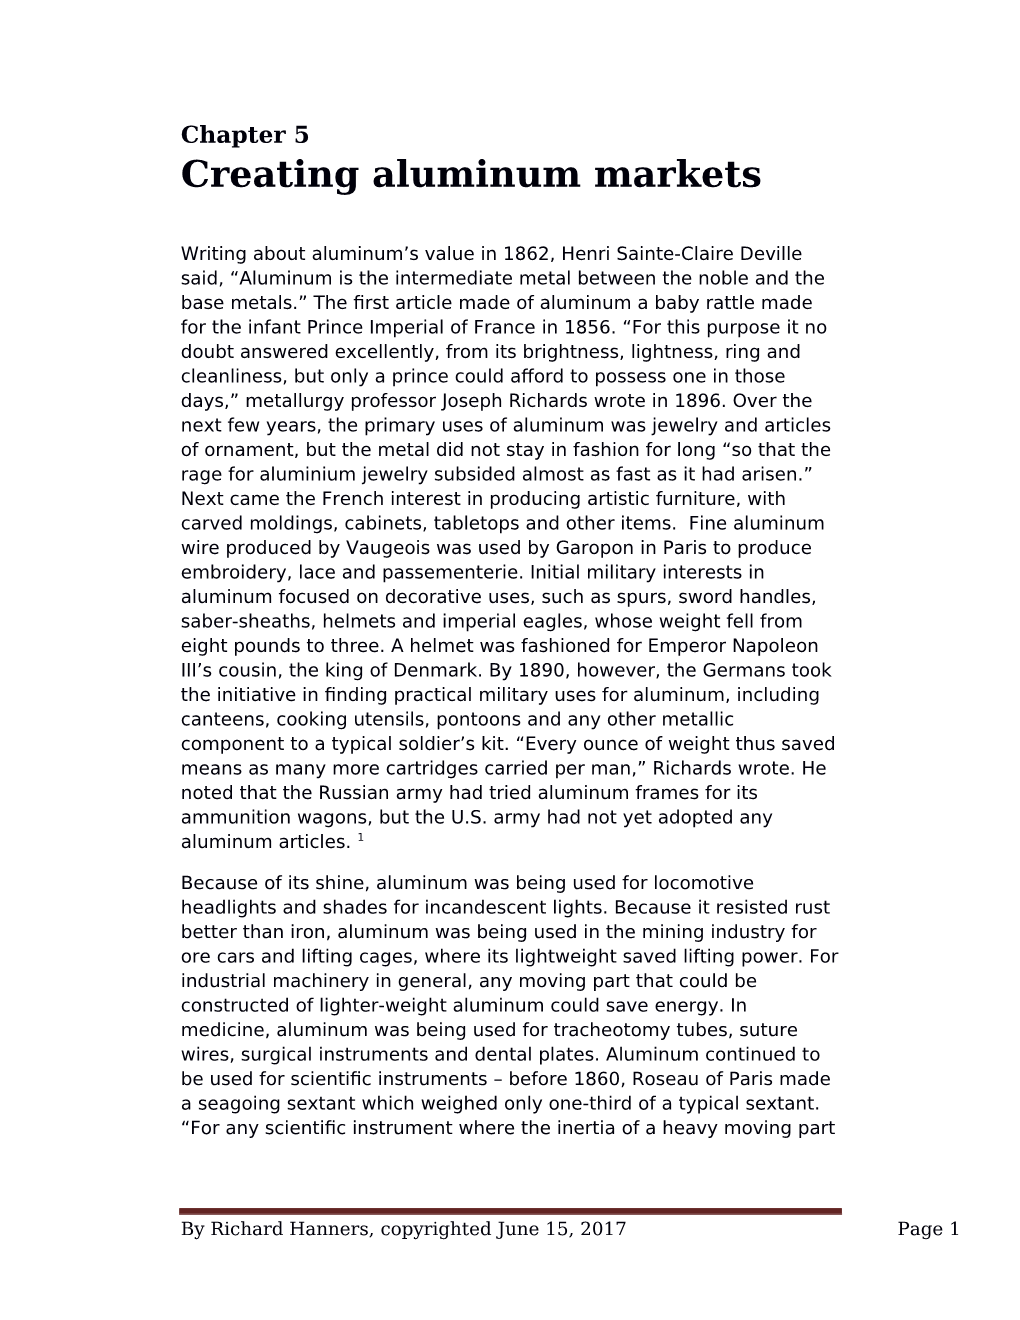 Chapter 5 – Creating Aluminum Markets